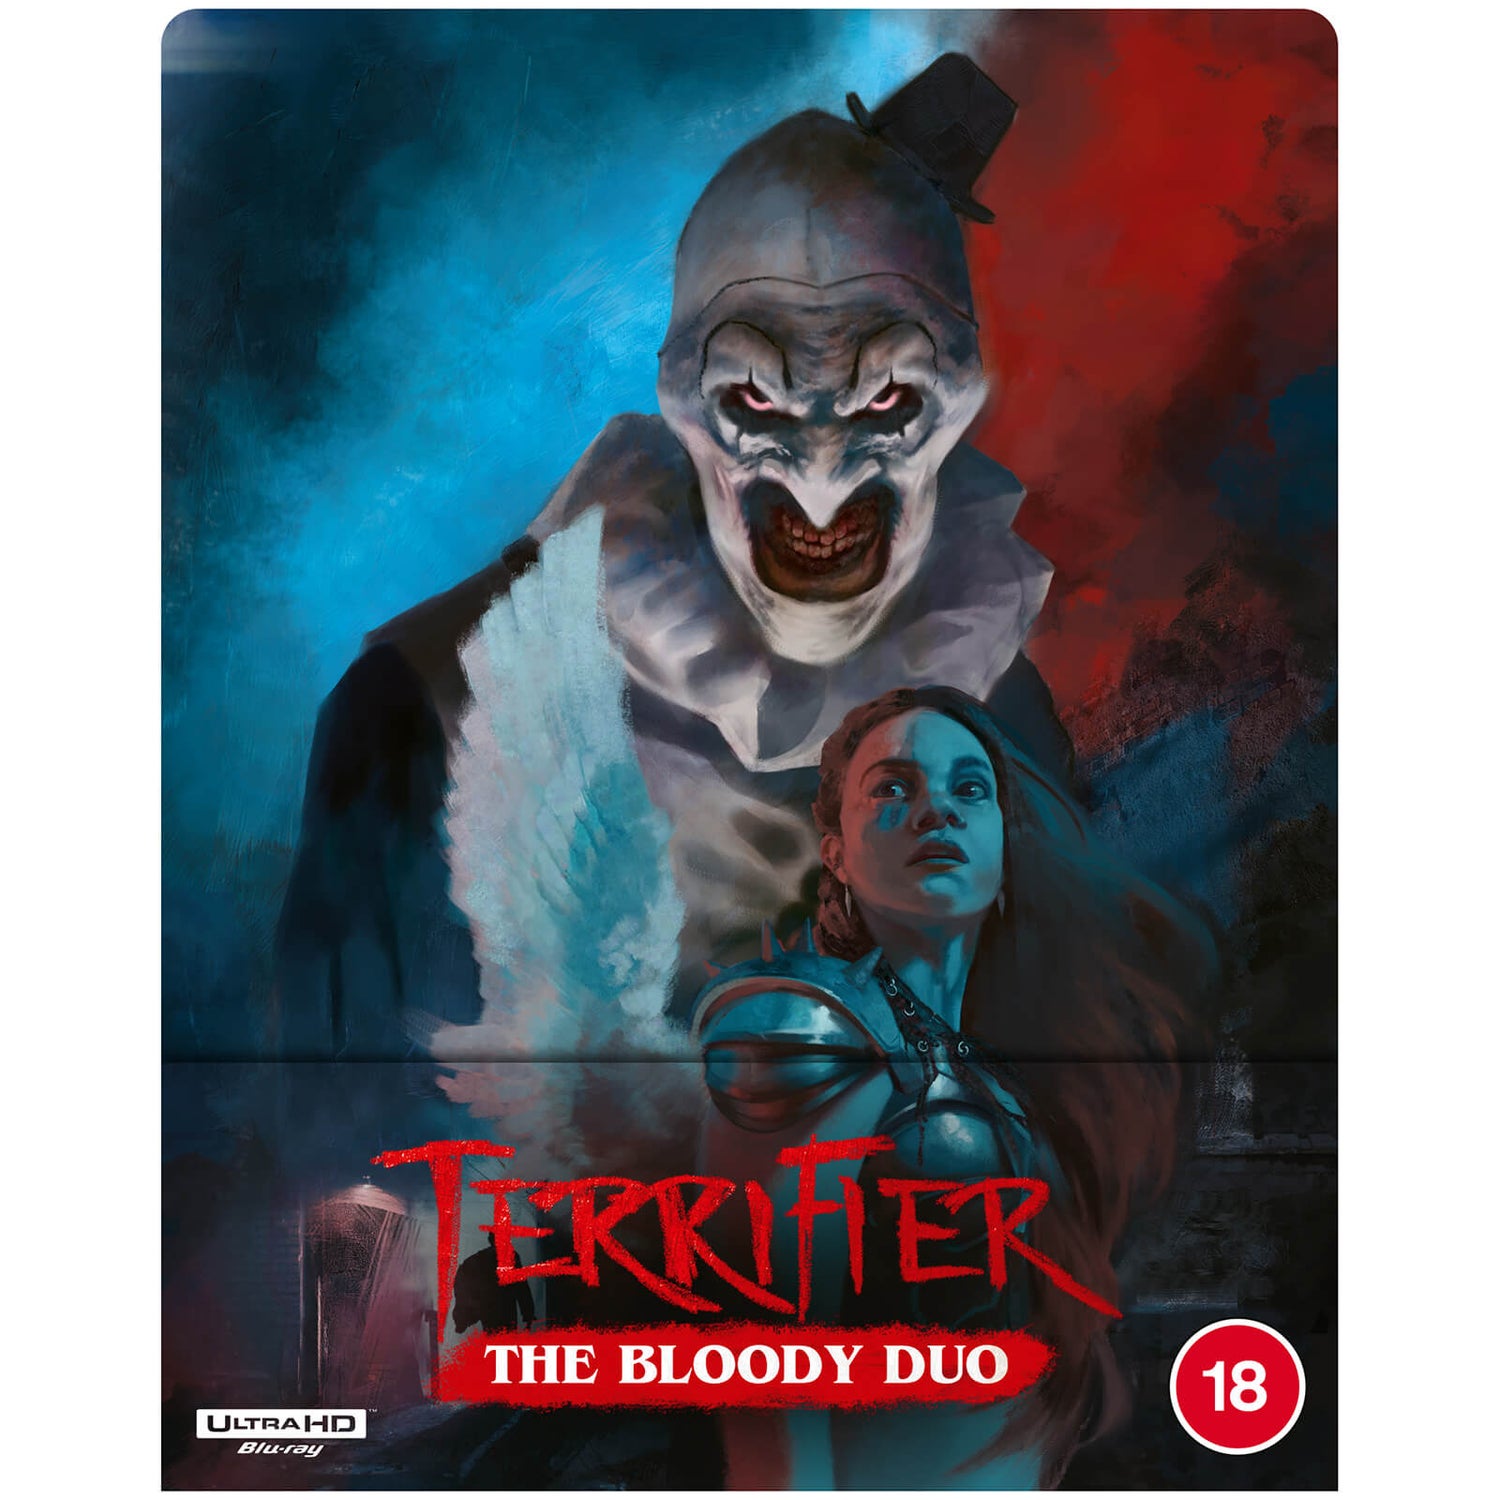 Terrifier The Bloody Duo - Limited Edition 4K Ultra HD Steelbook